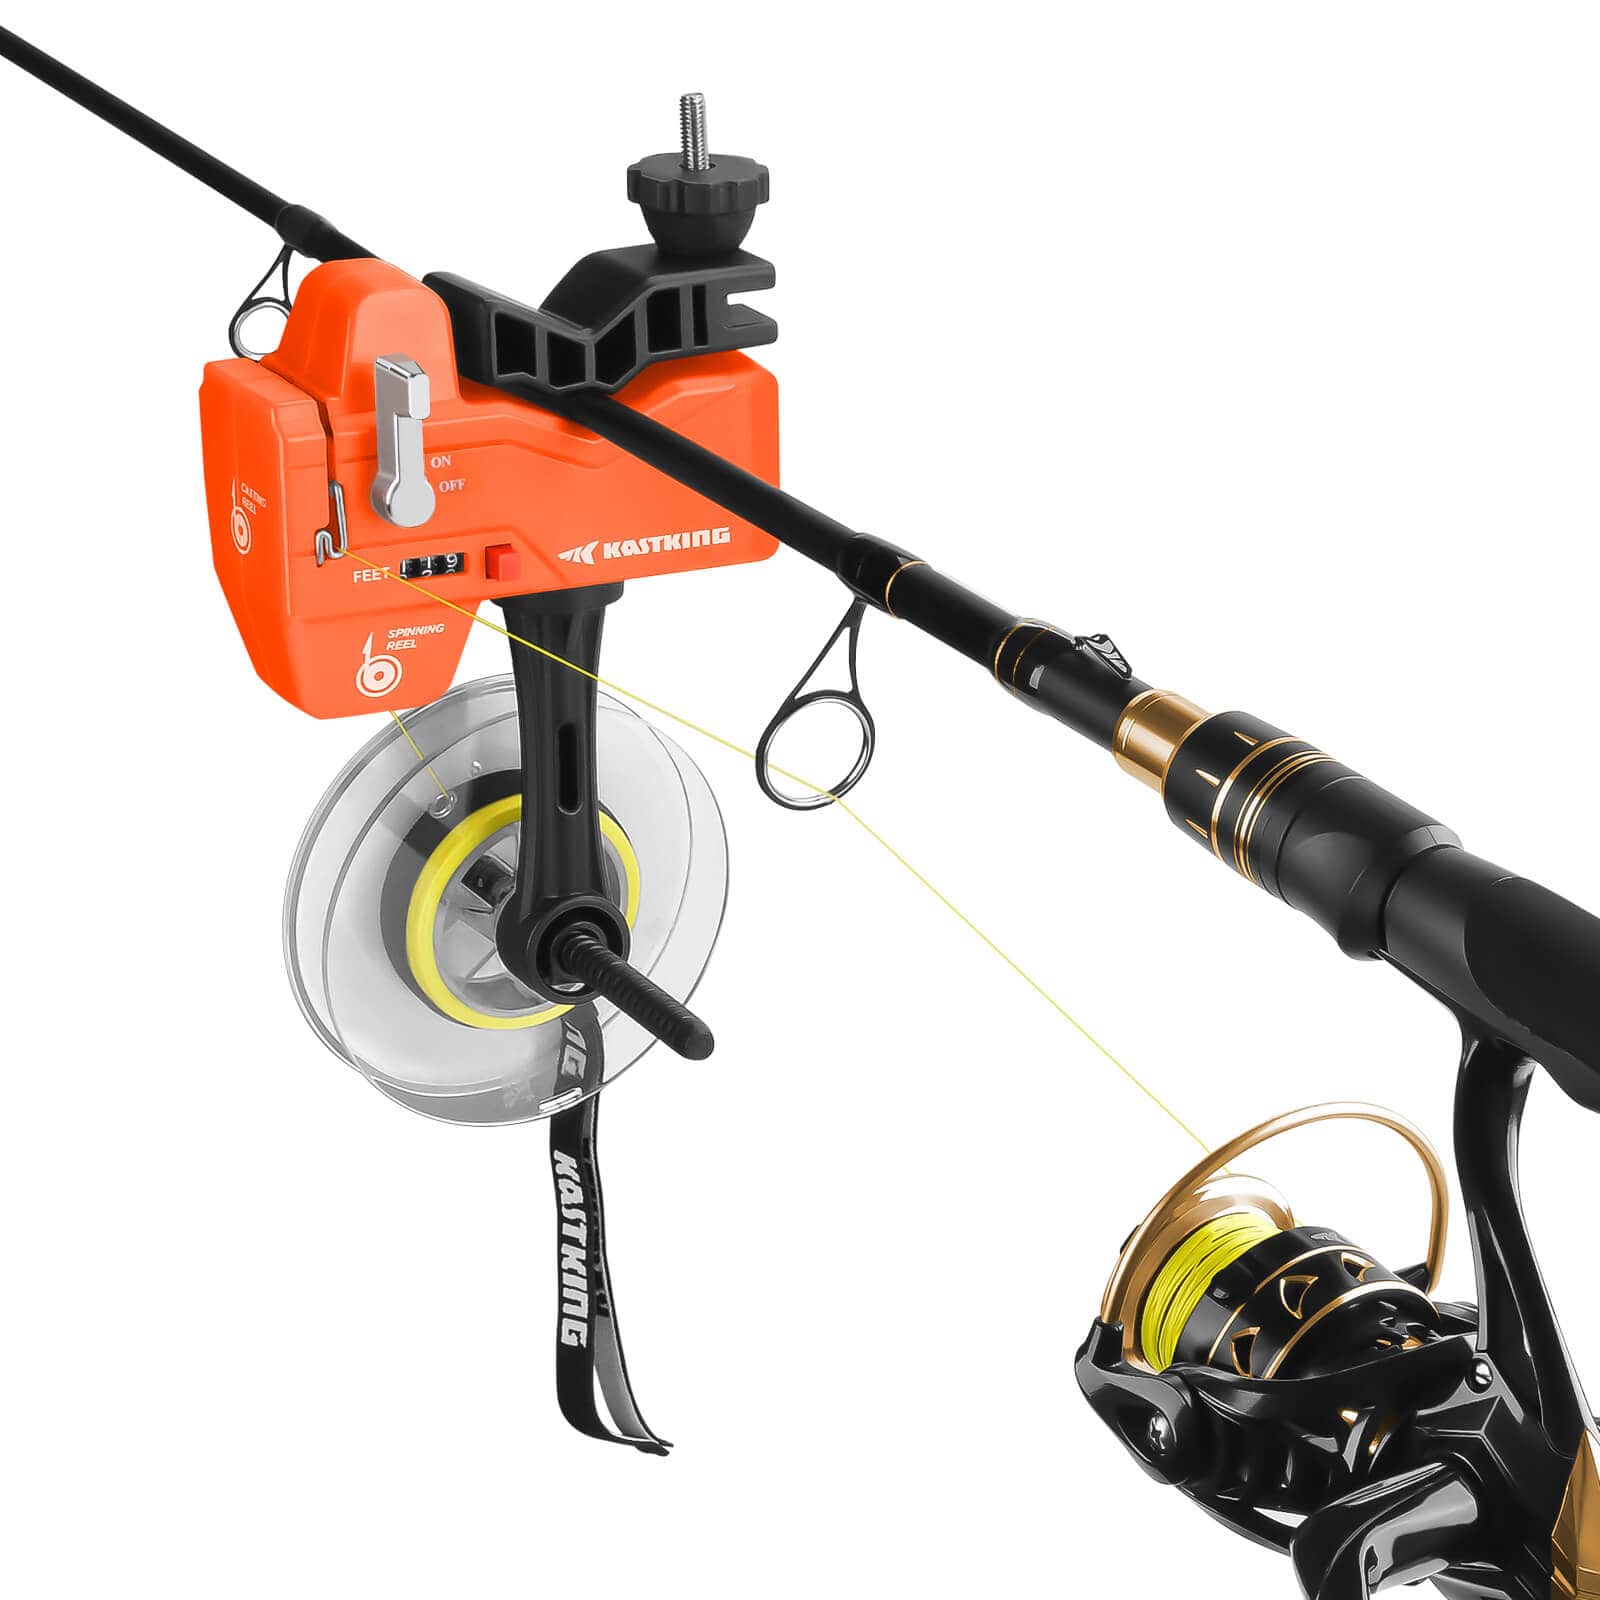 Fly Fishing Reel,Fishing Line Spooler,Portable Adjustable Fishing Line  Spooler Reel Spooling System Tackle Tool